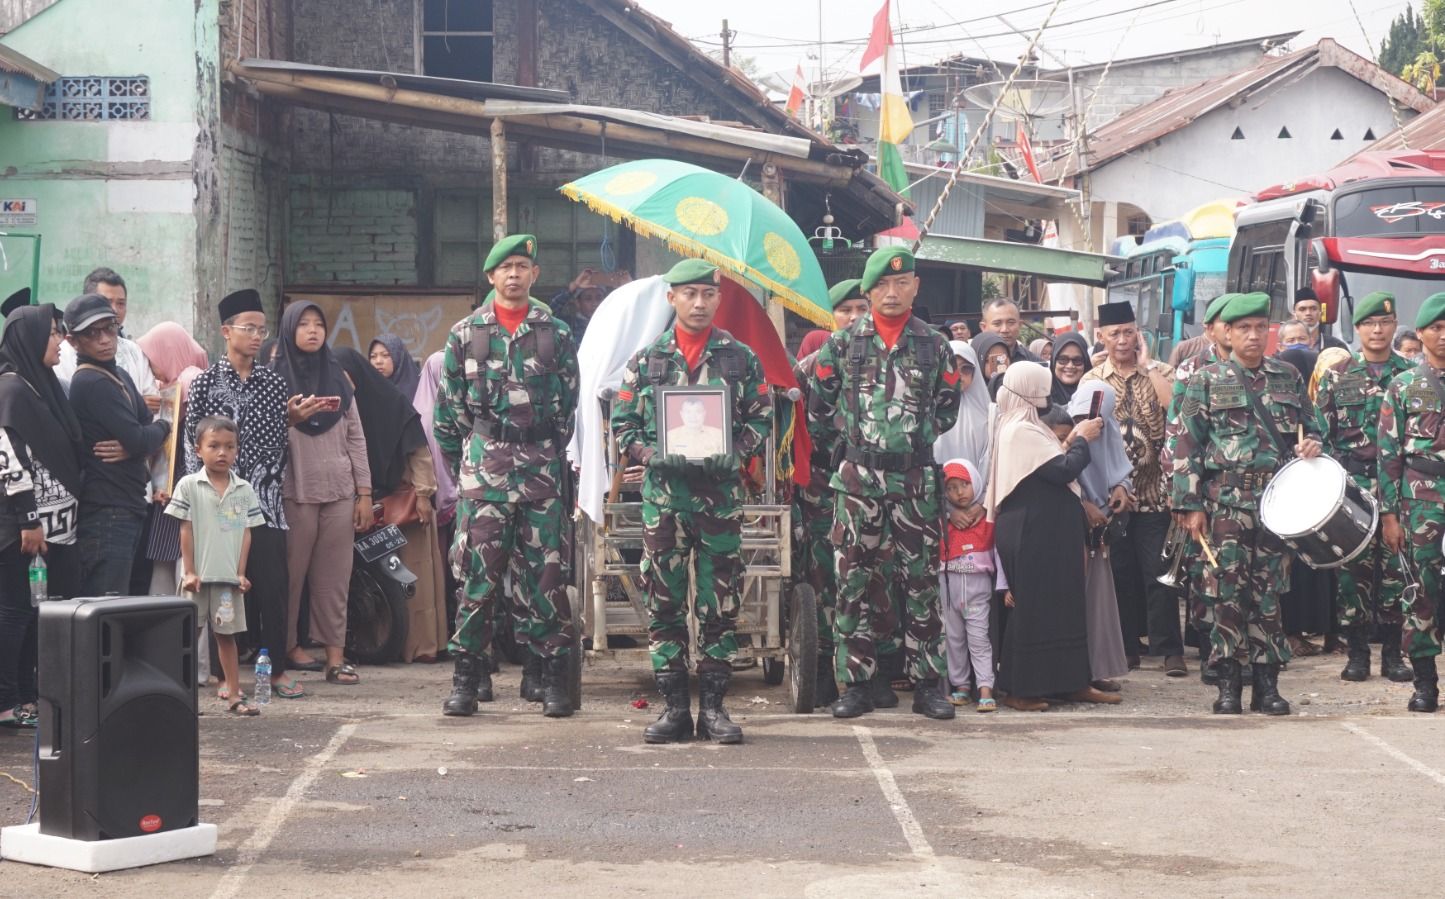 Prosesi pemakaman Ketua Legiun Veteran Republik Indonesia (LVRI) dilakukan secara militer dan dipimpin oleh Komandan Kodim 0707/Wonosobo. Pendim 0707